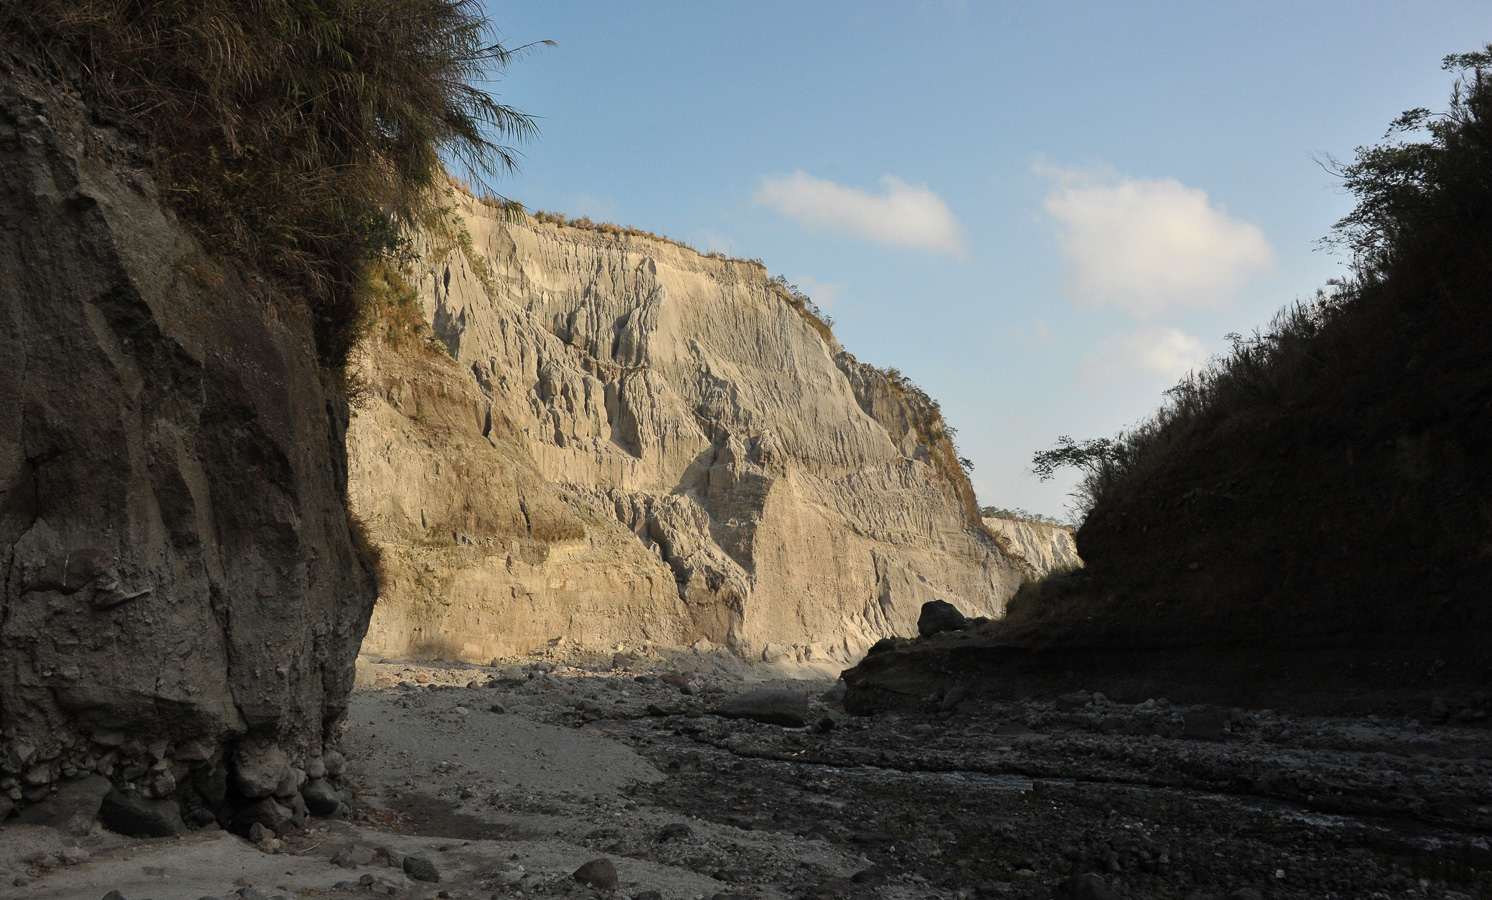 Mount Pinatubo [28 mm, 1/1250 sec at f / 13, ISO 1600]